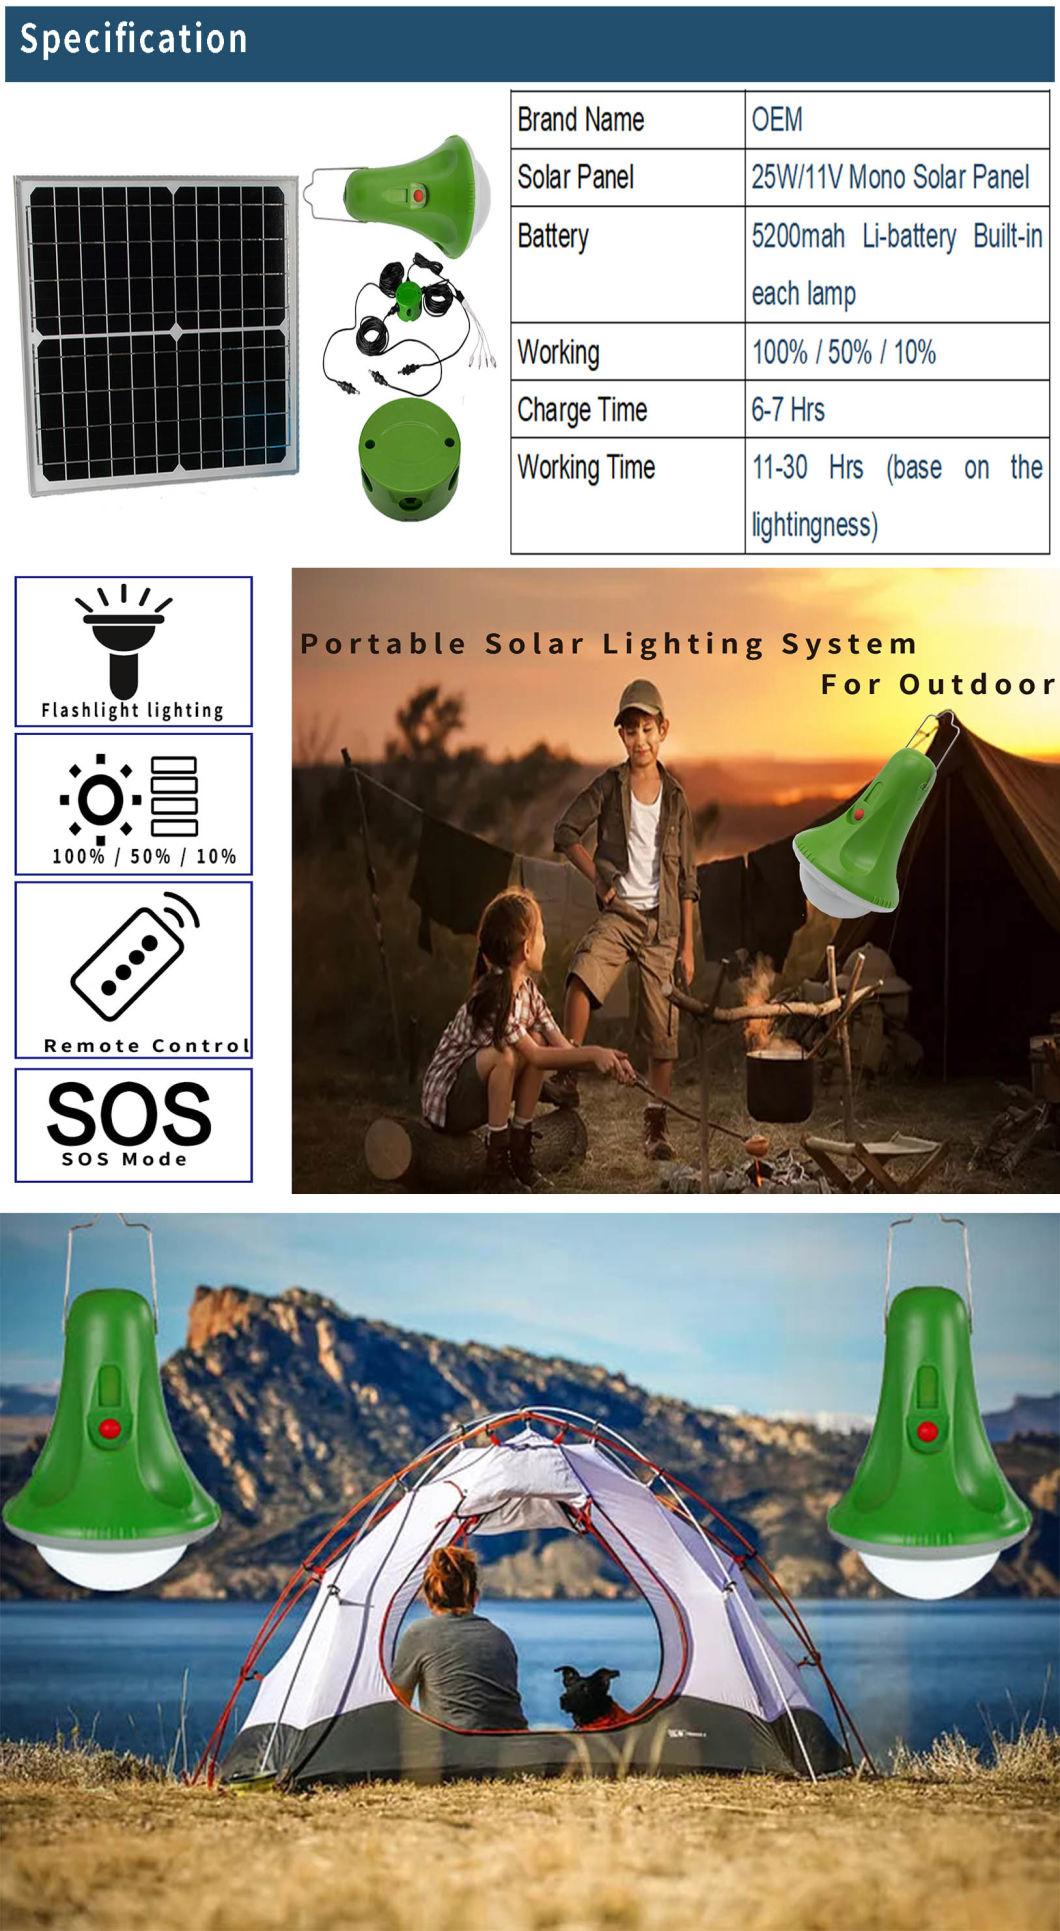 Global Sunrise Portable Solar Home Light with Power Display